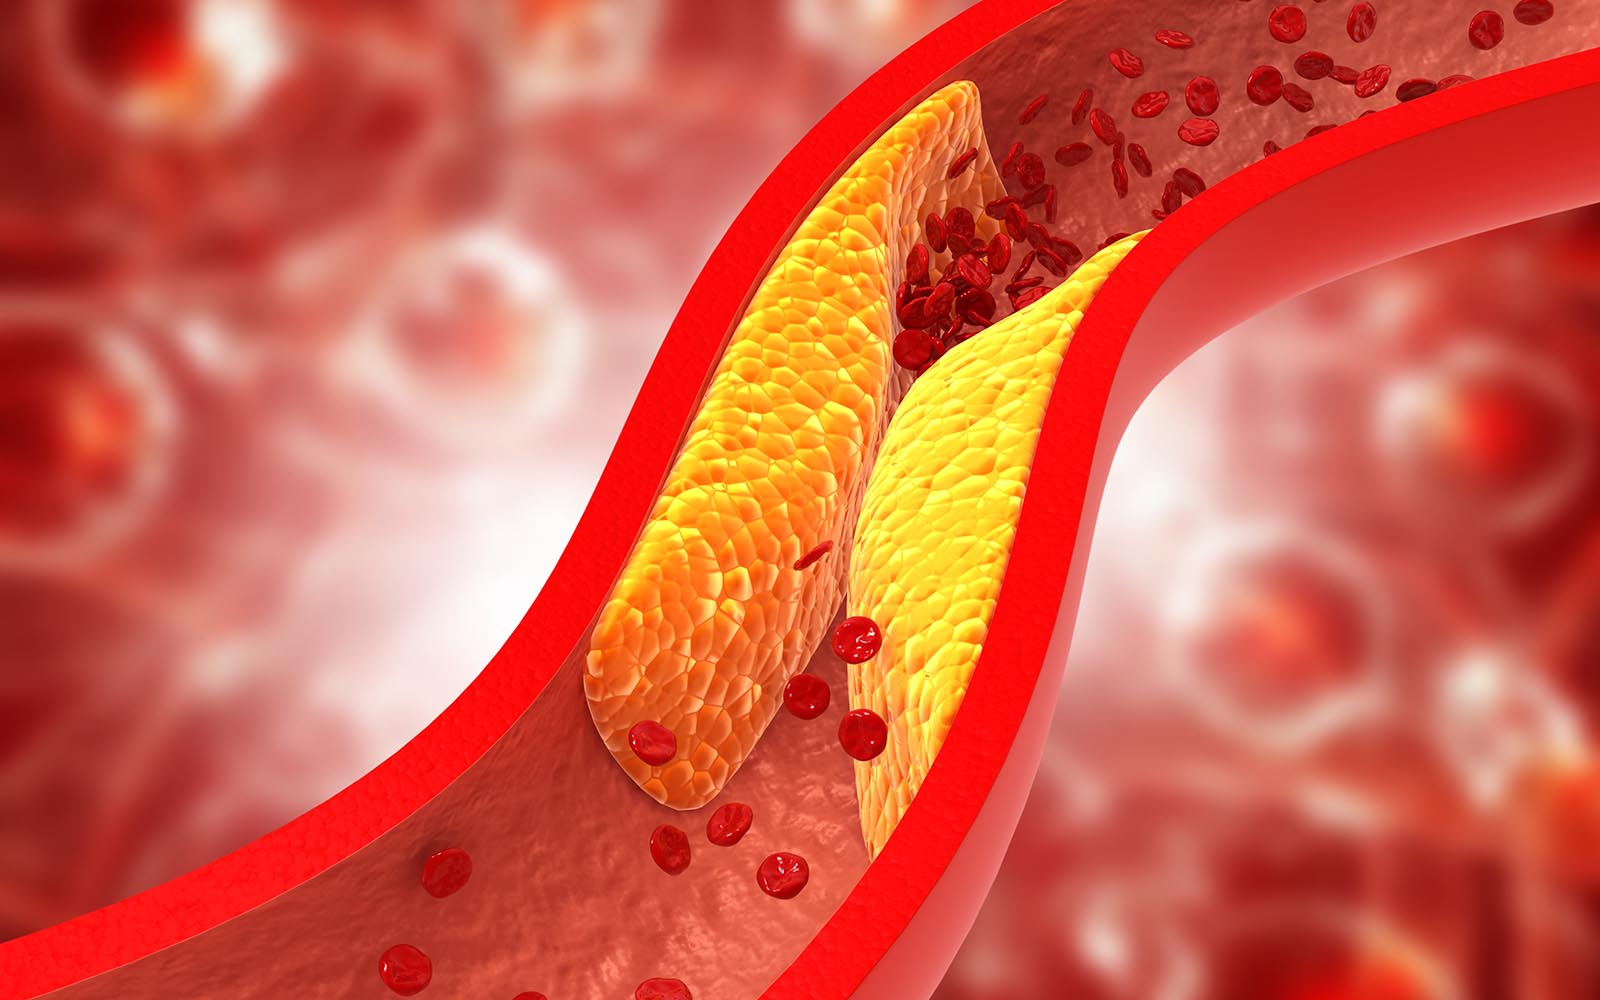 Arteriosklerose Symptome - Hauptursache der koronaren Herzkrankheit